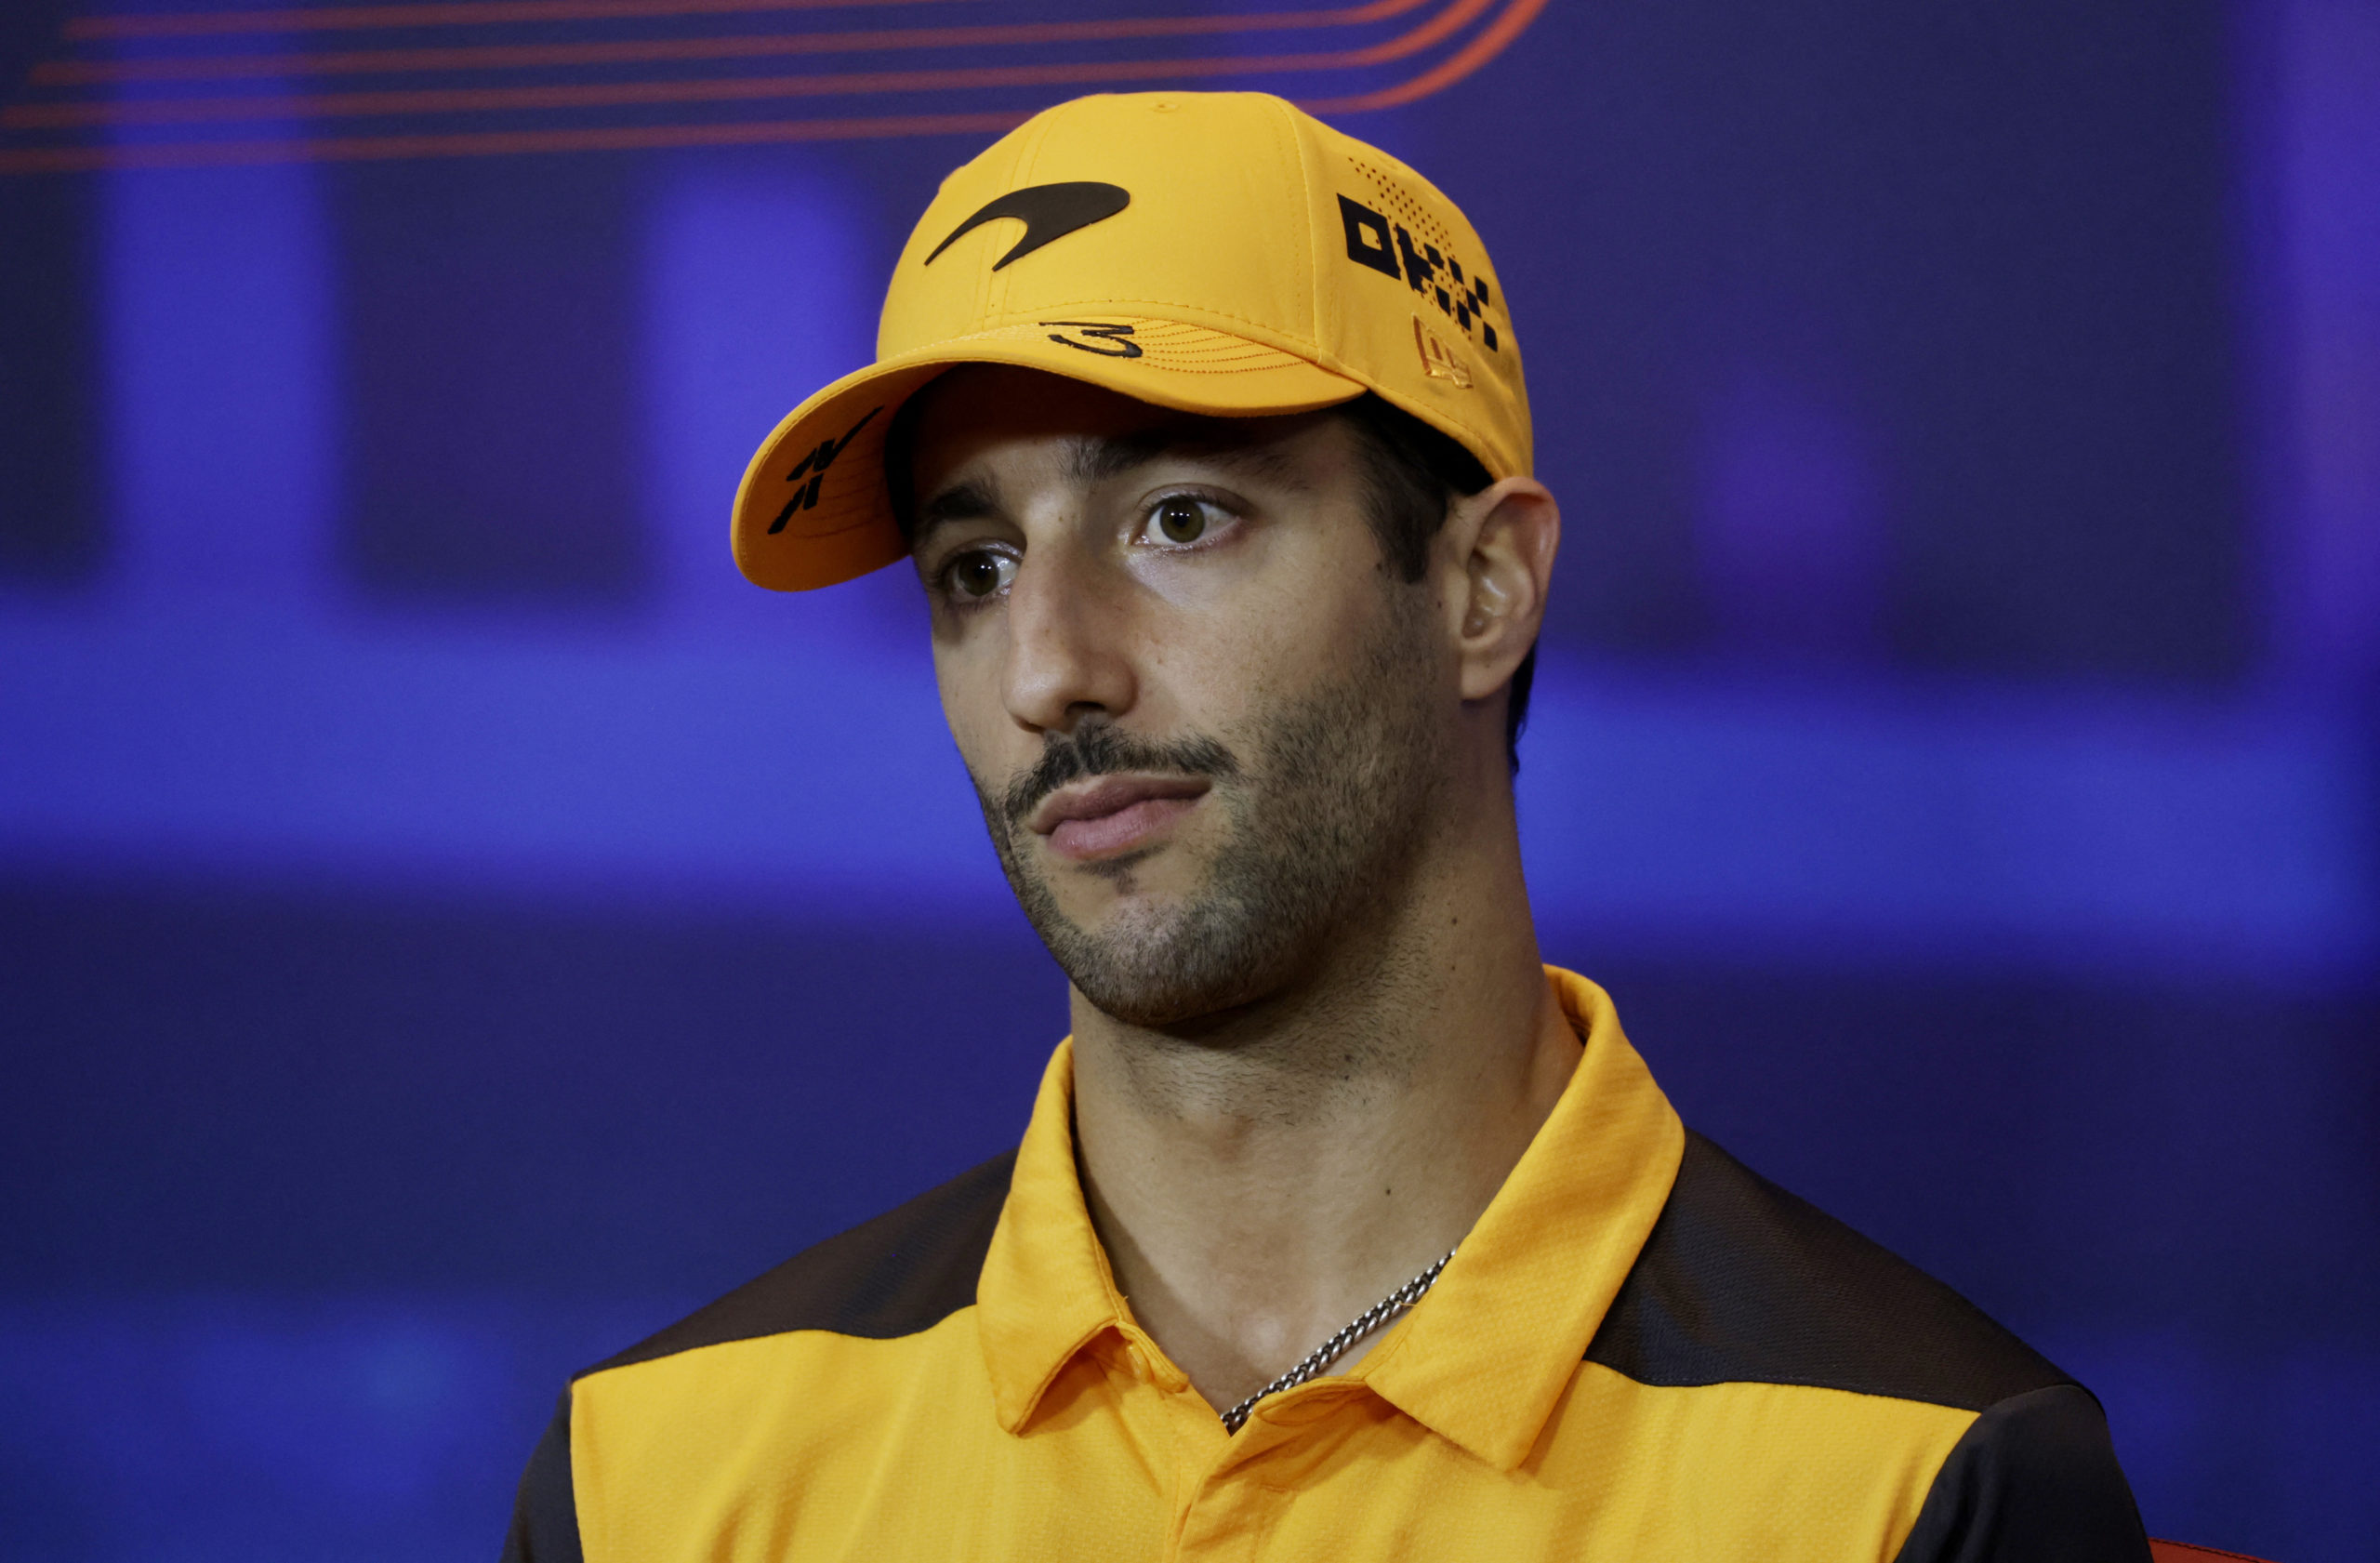 Daniel Ricciardo says Abu Dhabi Grand Prix could be his last race in F1 ...